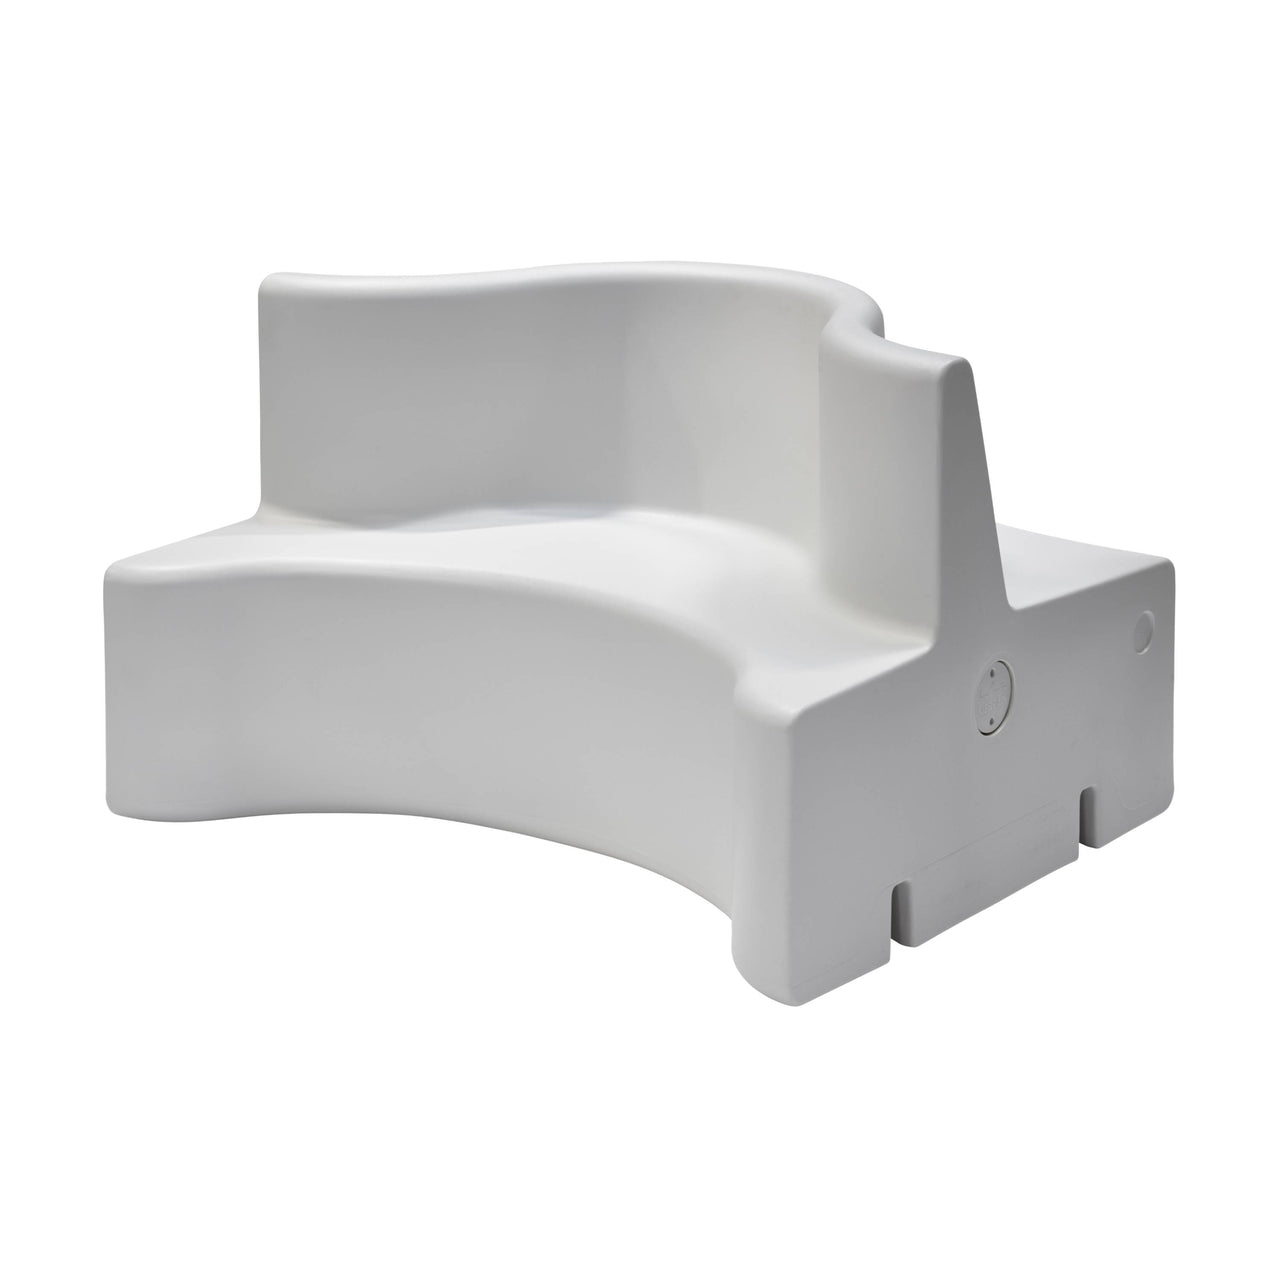 Cloverleaf Sofa Modules: Extension Unit + White